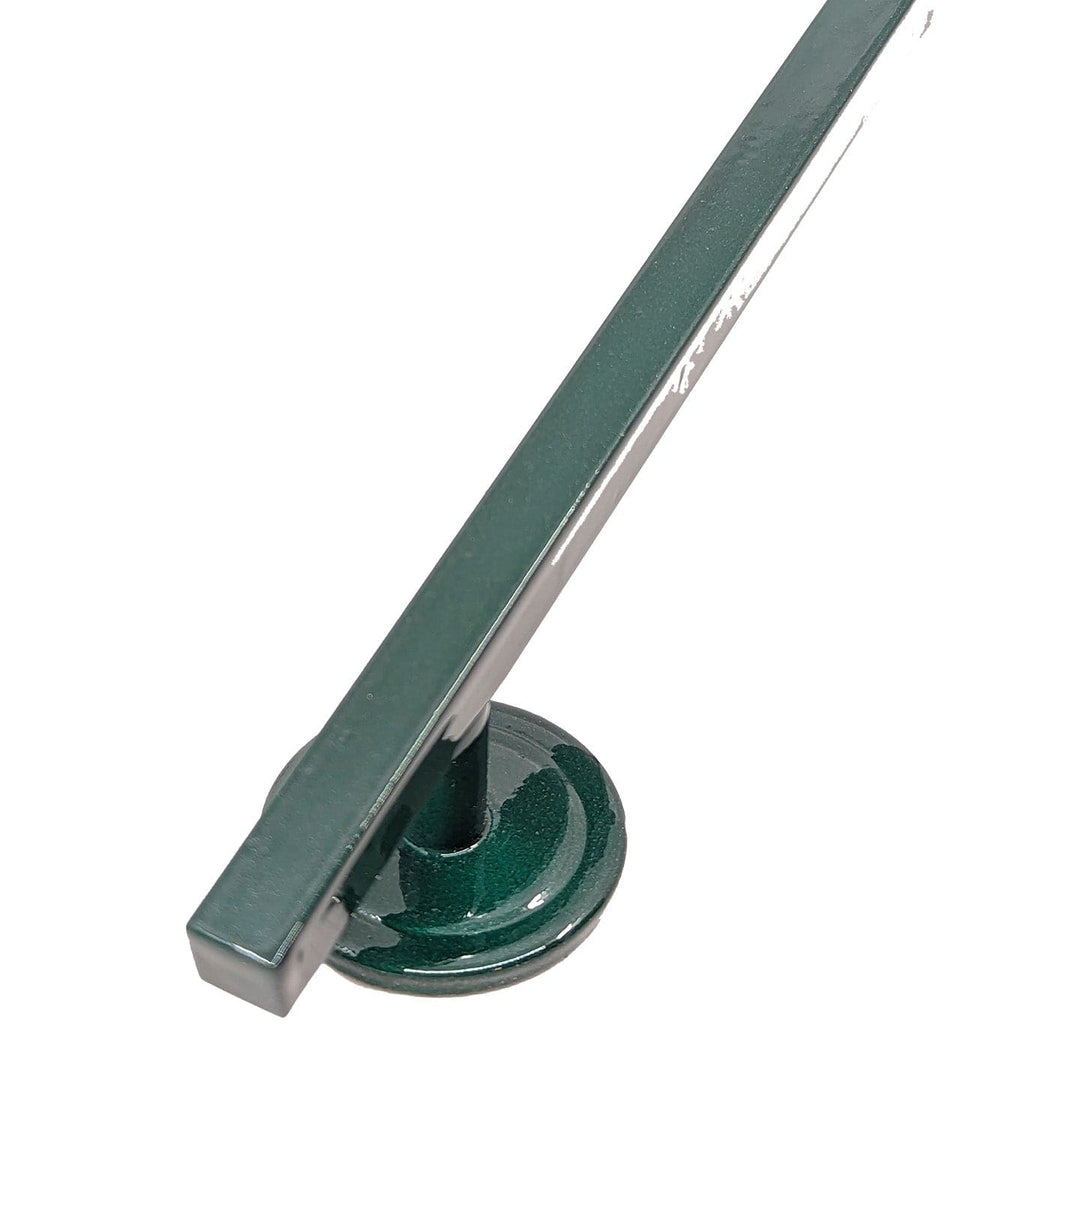 Teak Tuning Straight, Mellow Peak Style Fingerboard Rail, 12" Long - Steel Construction - Emerald Green Prism